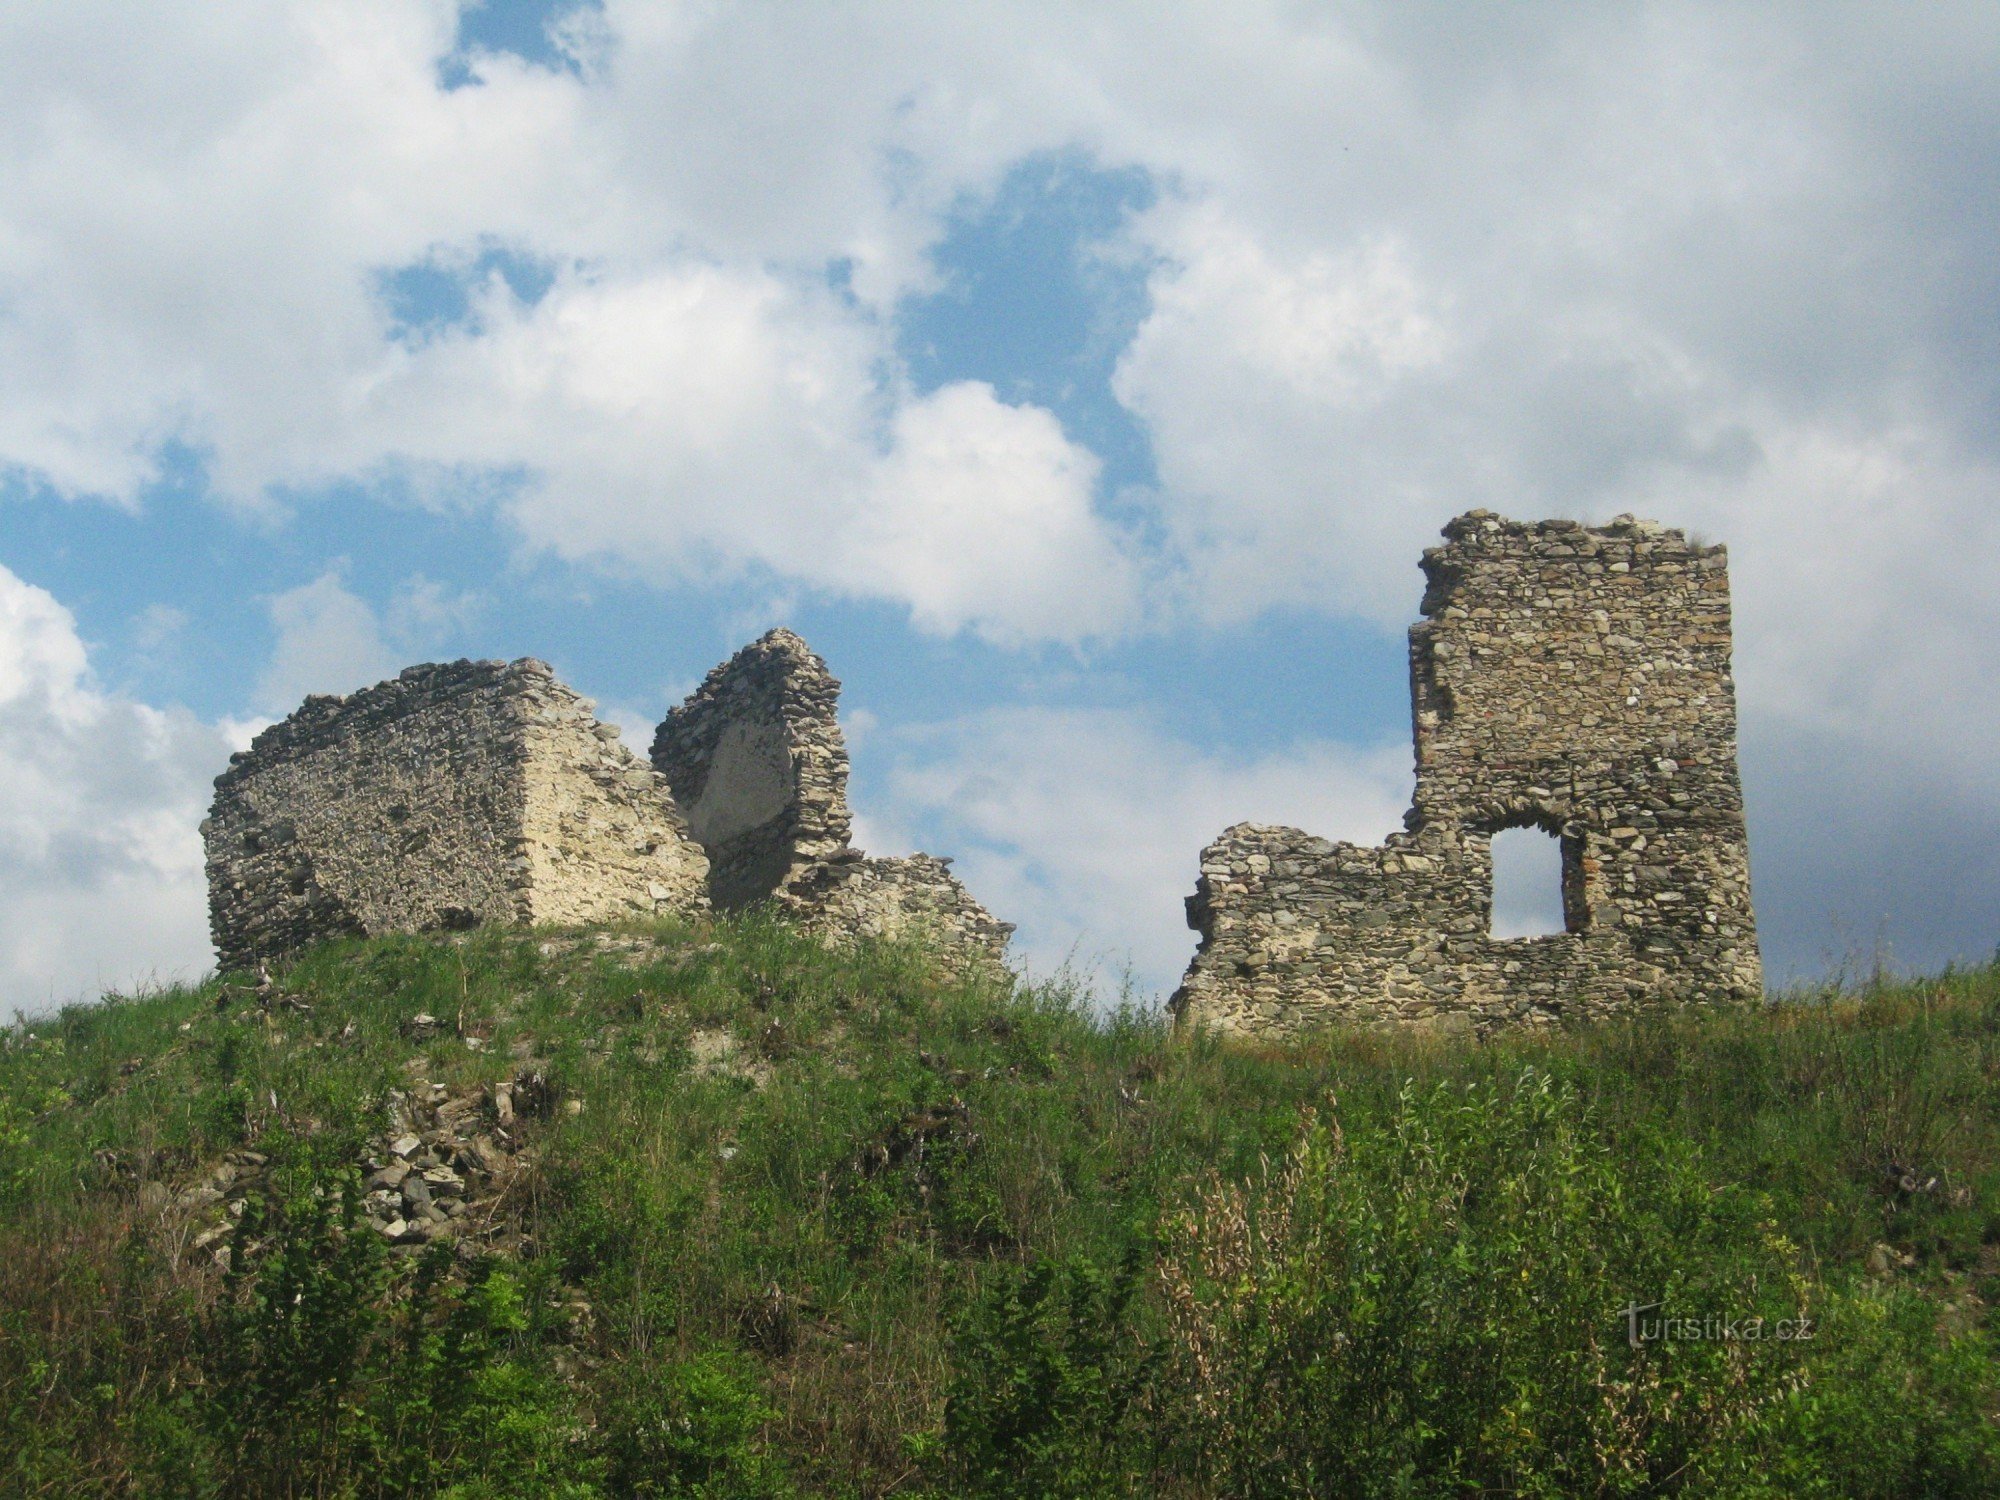 Brníčekin linnan romanttisille raunioille